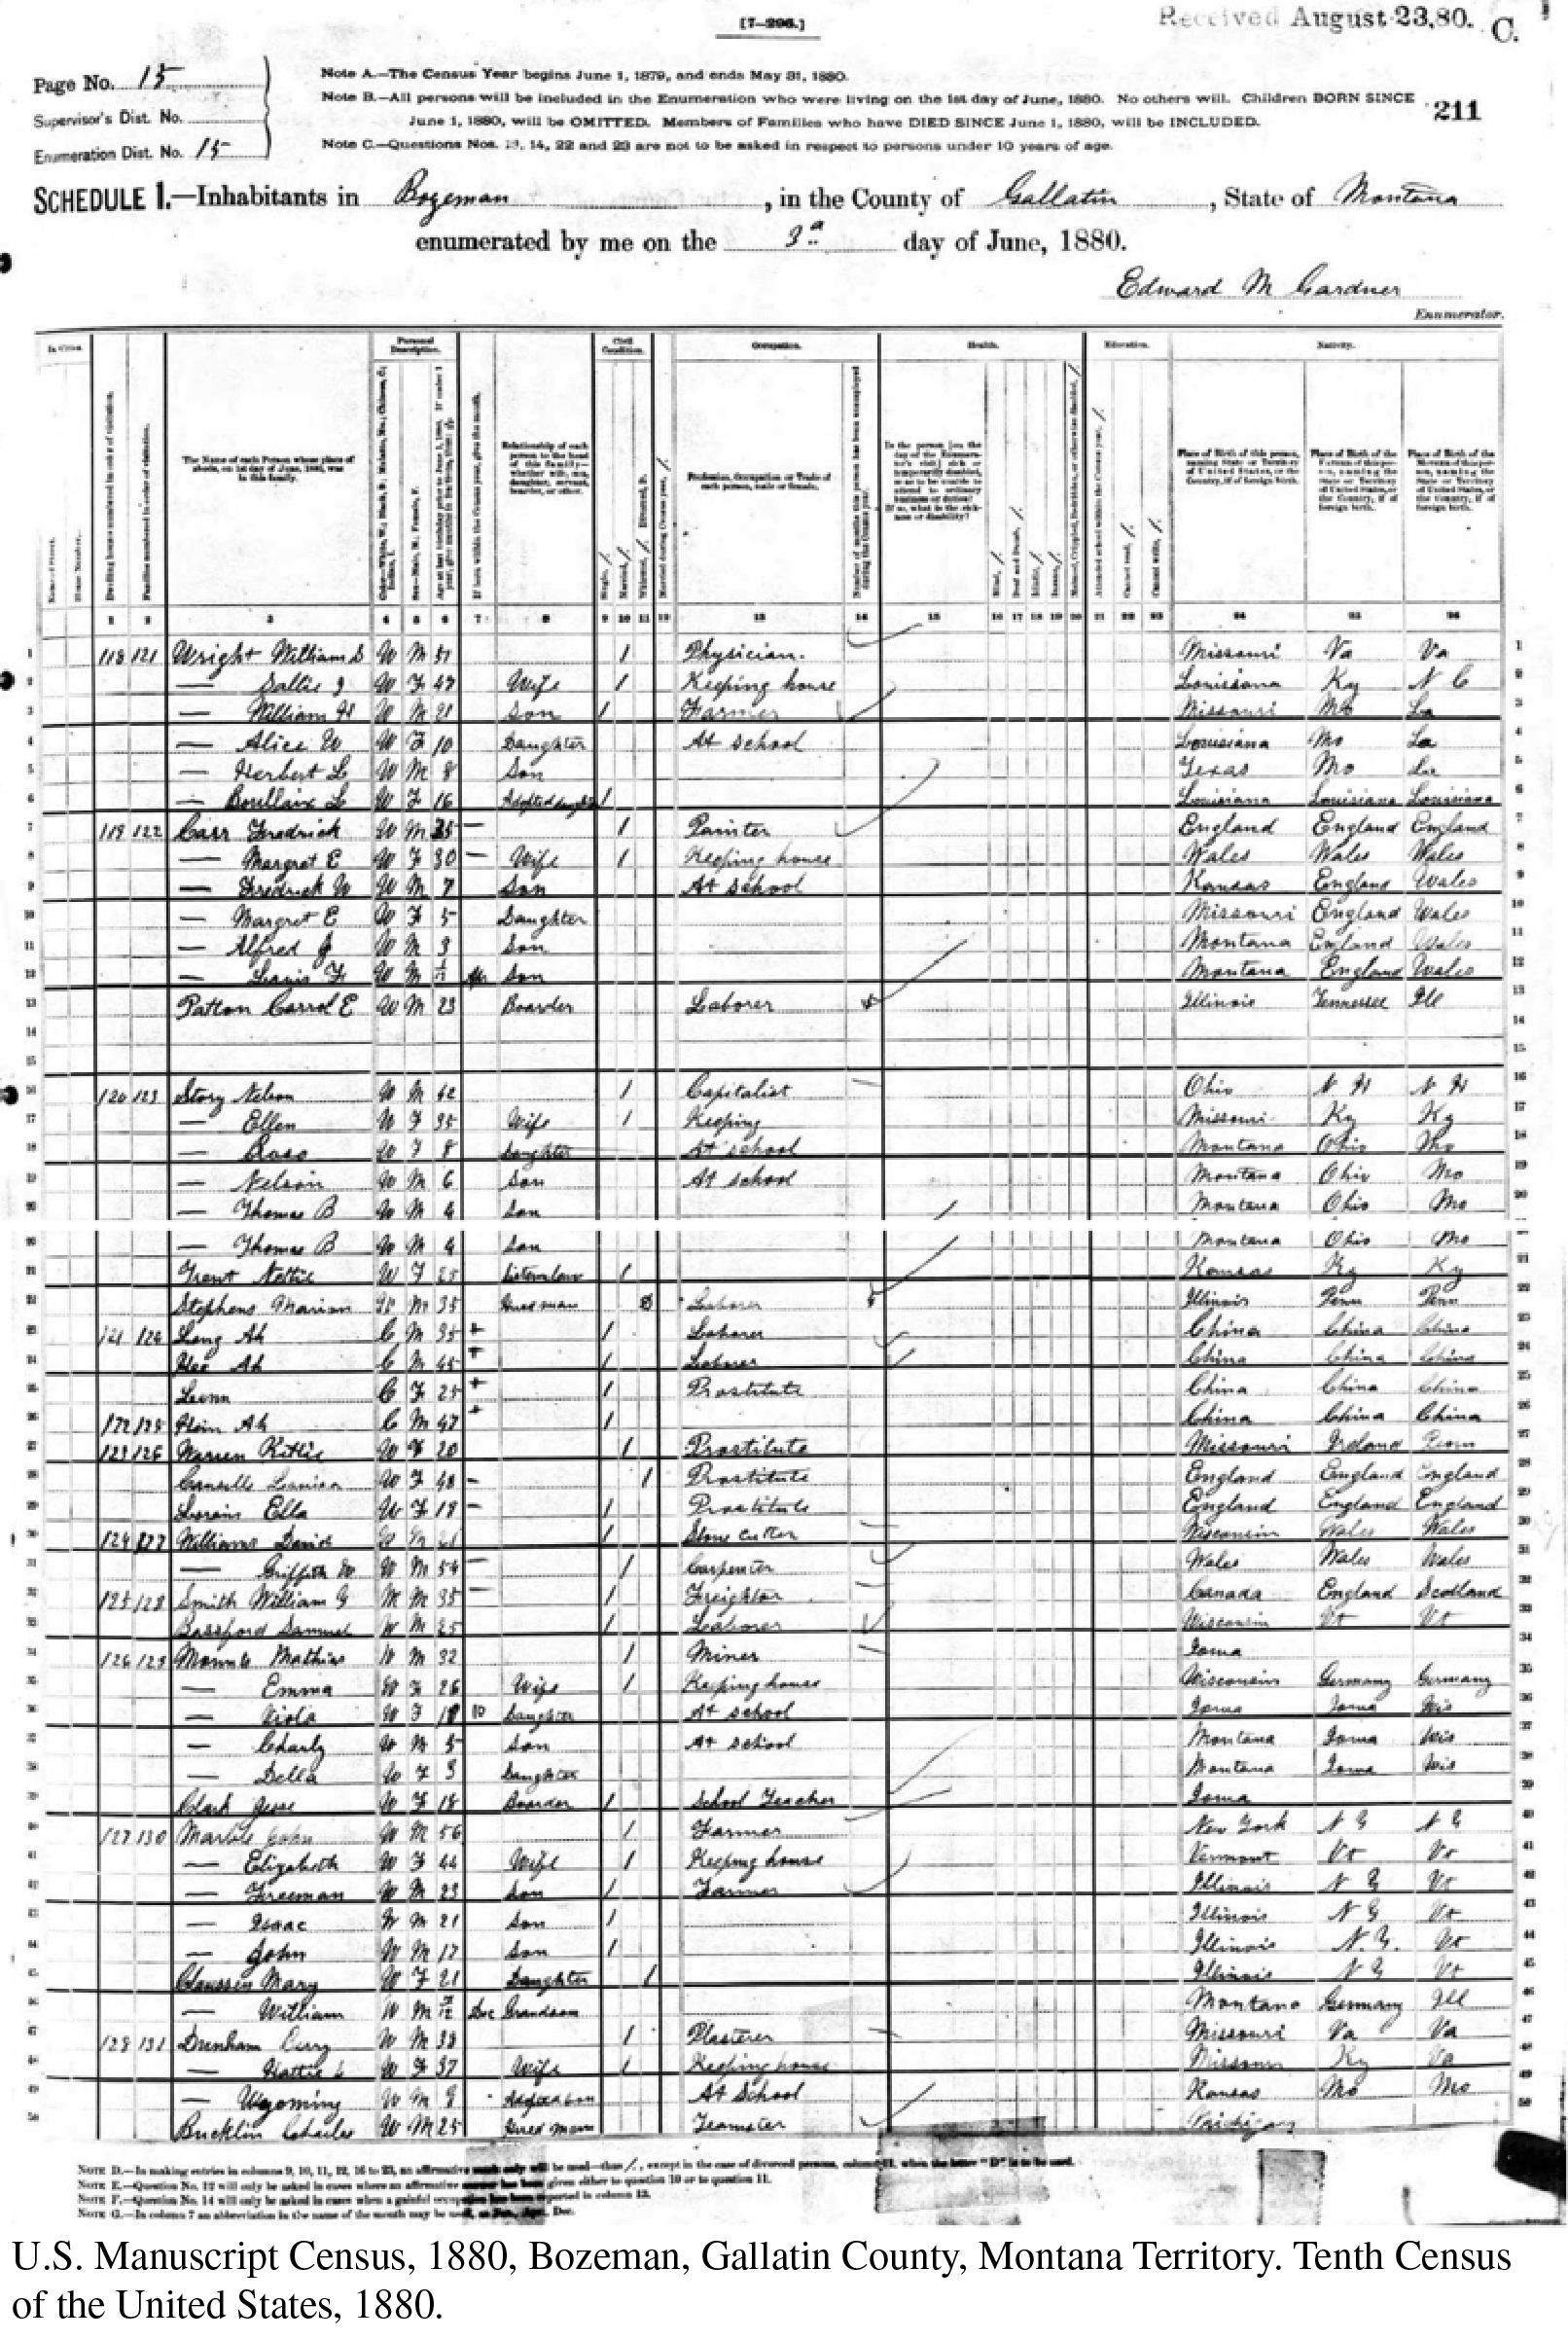 U.S. Manuscript Census, 1880, Gallatin County, Bozeman 